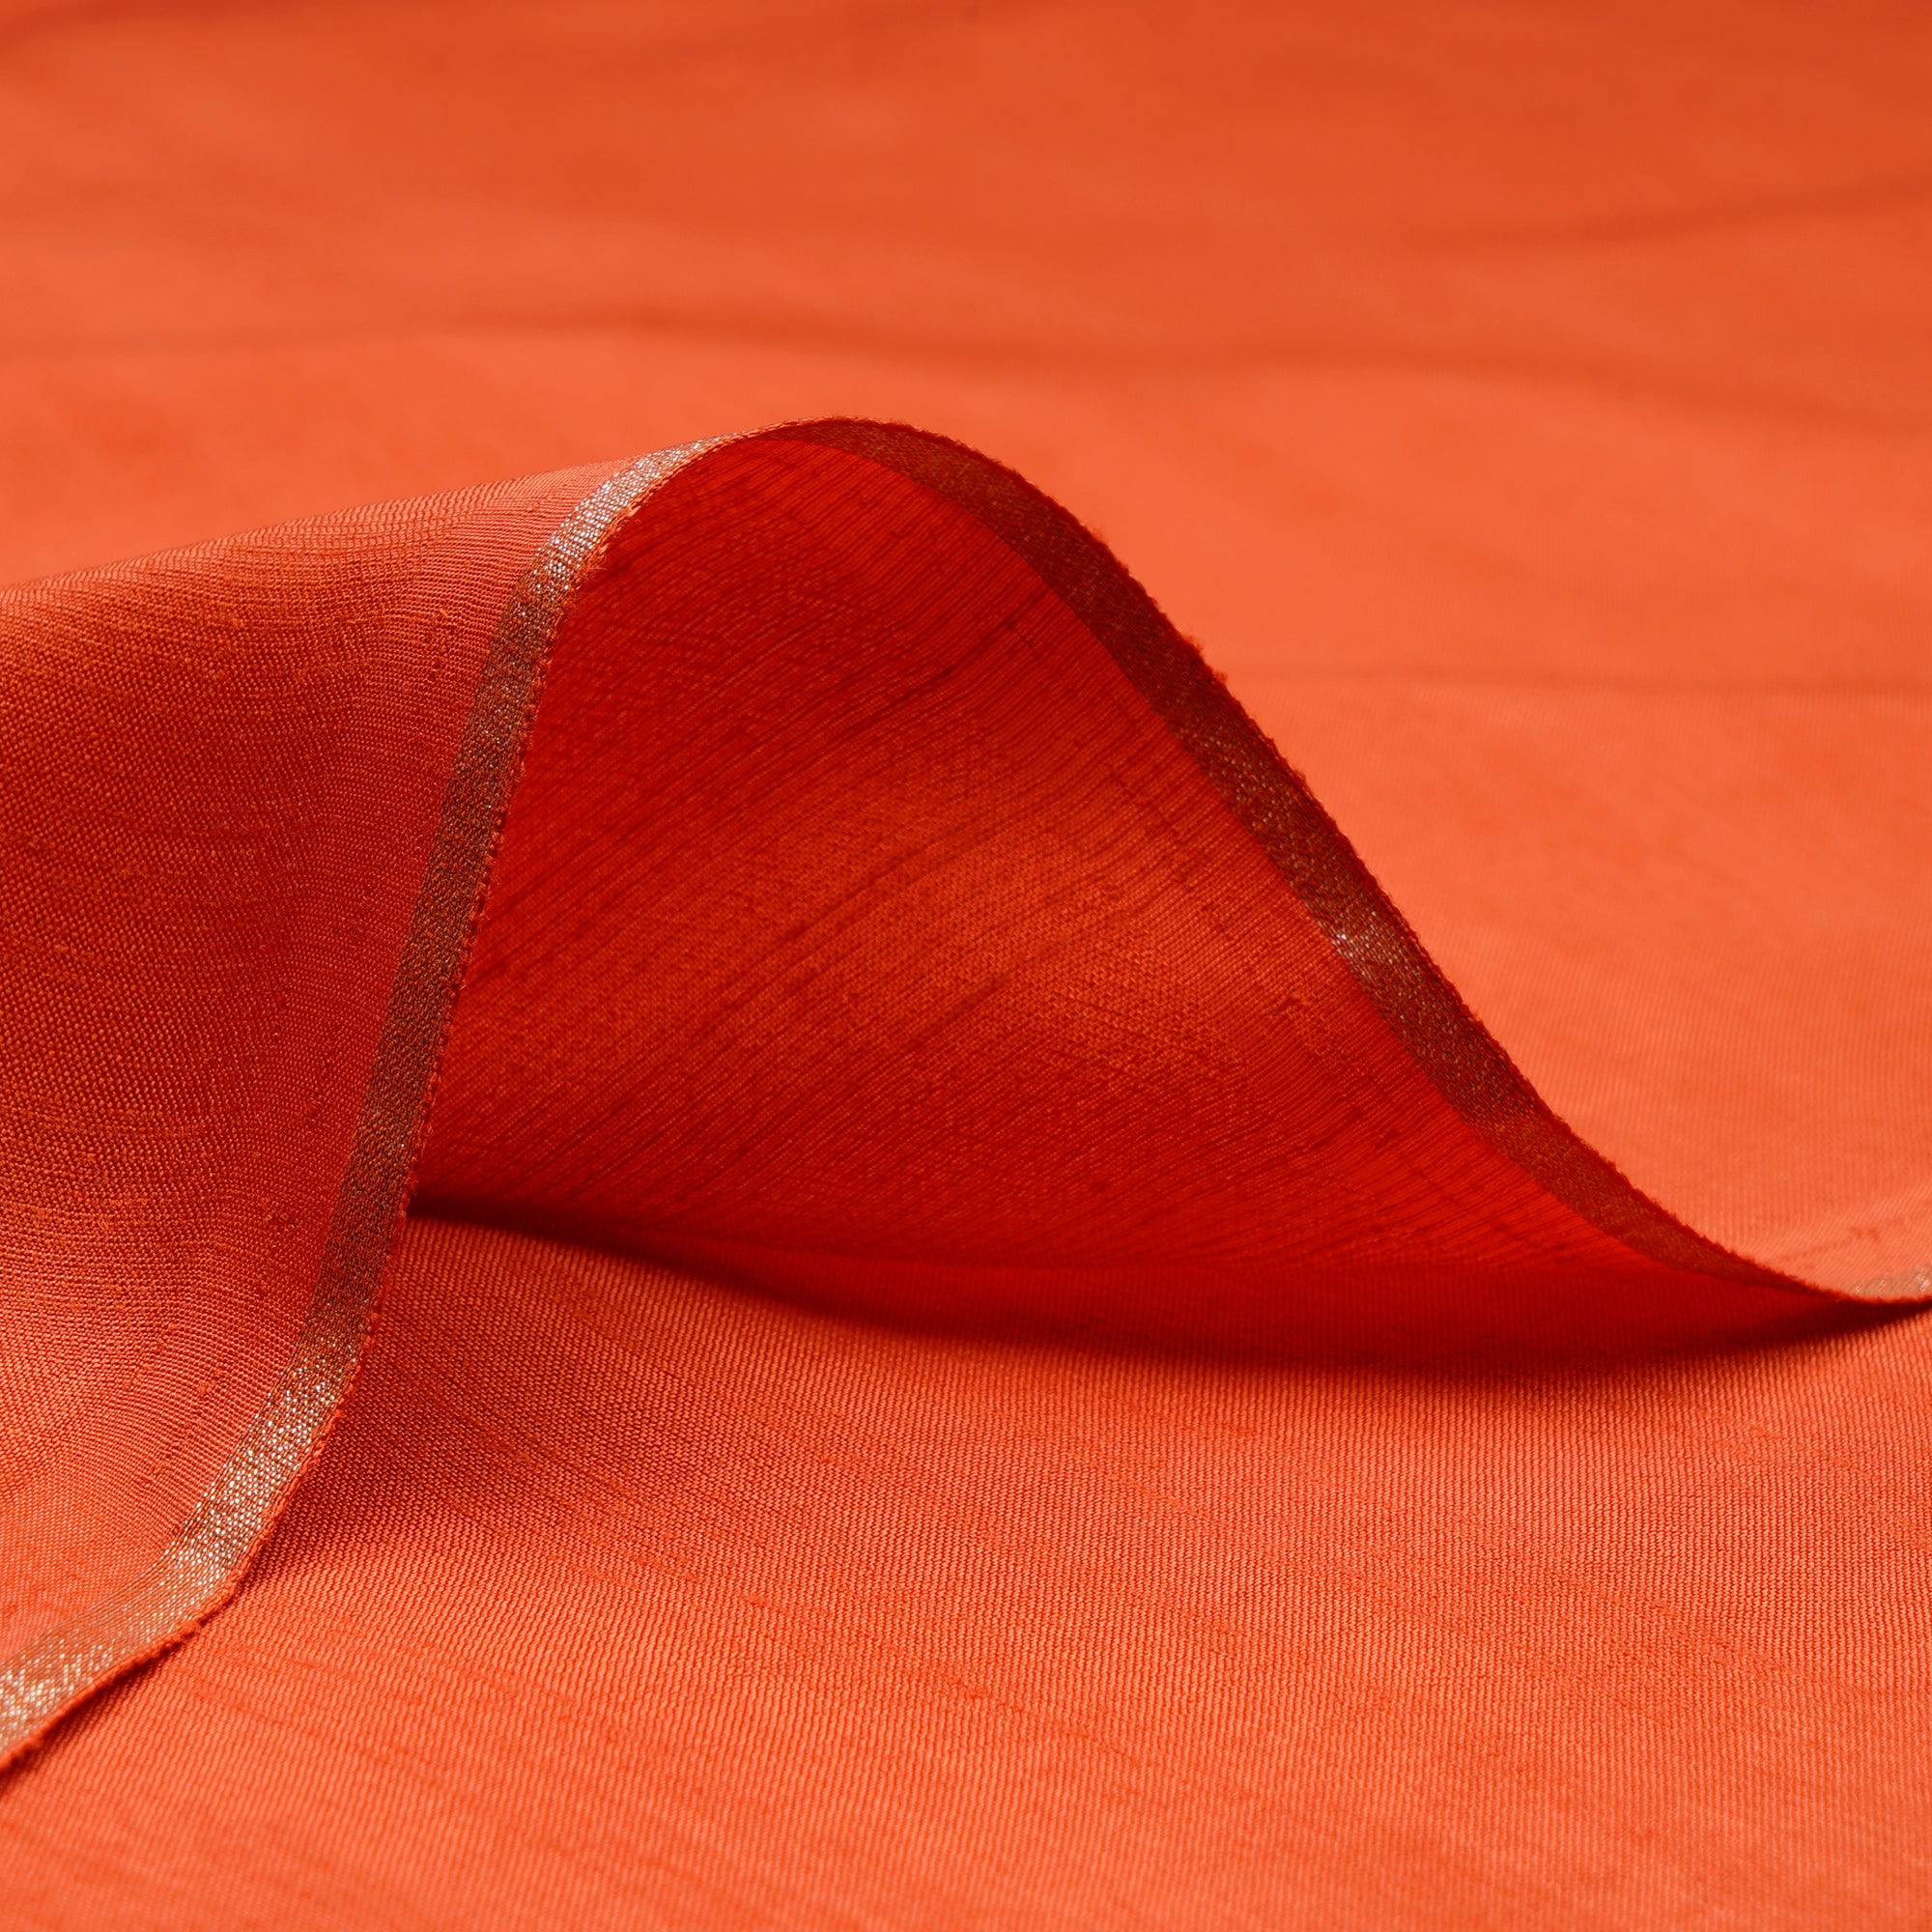 Orange Color Viscose Slub Fabric